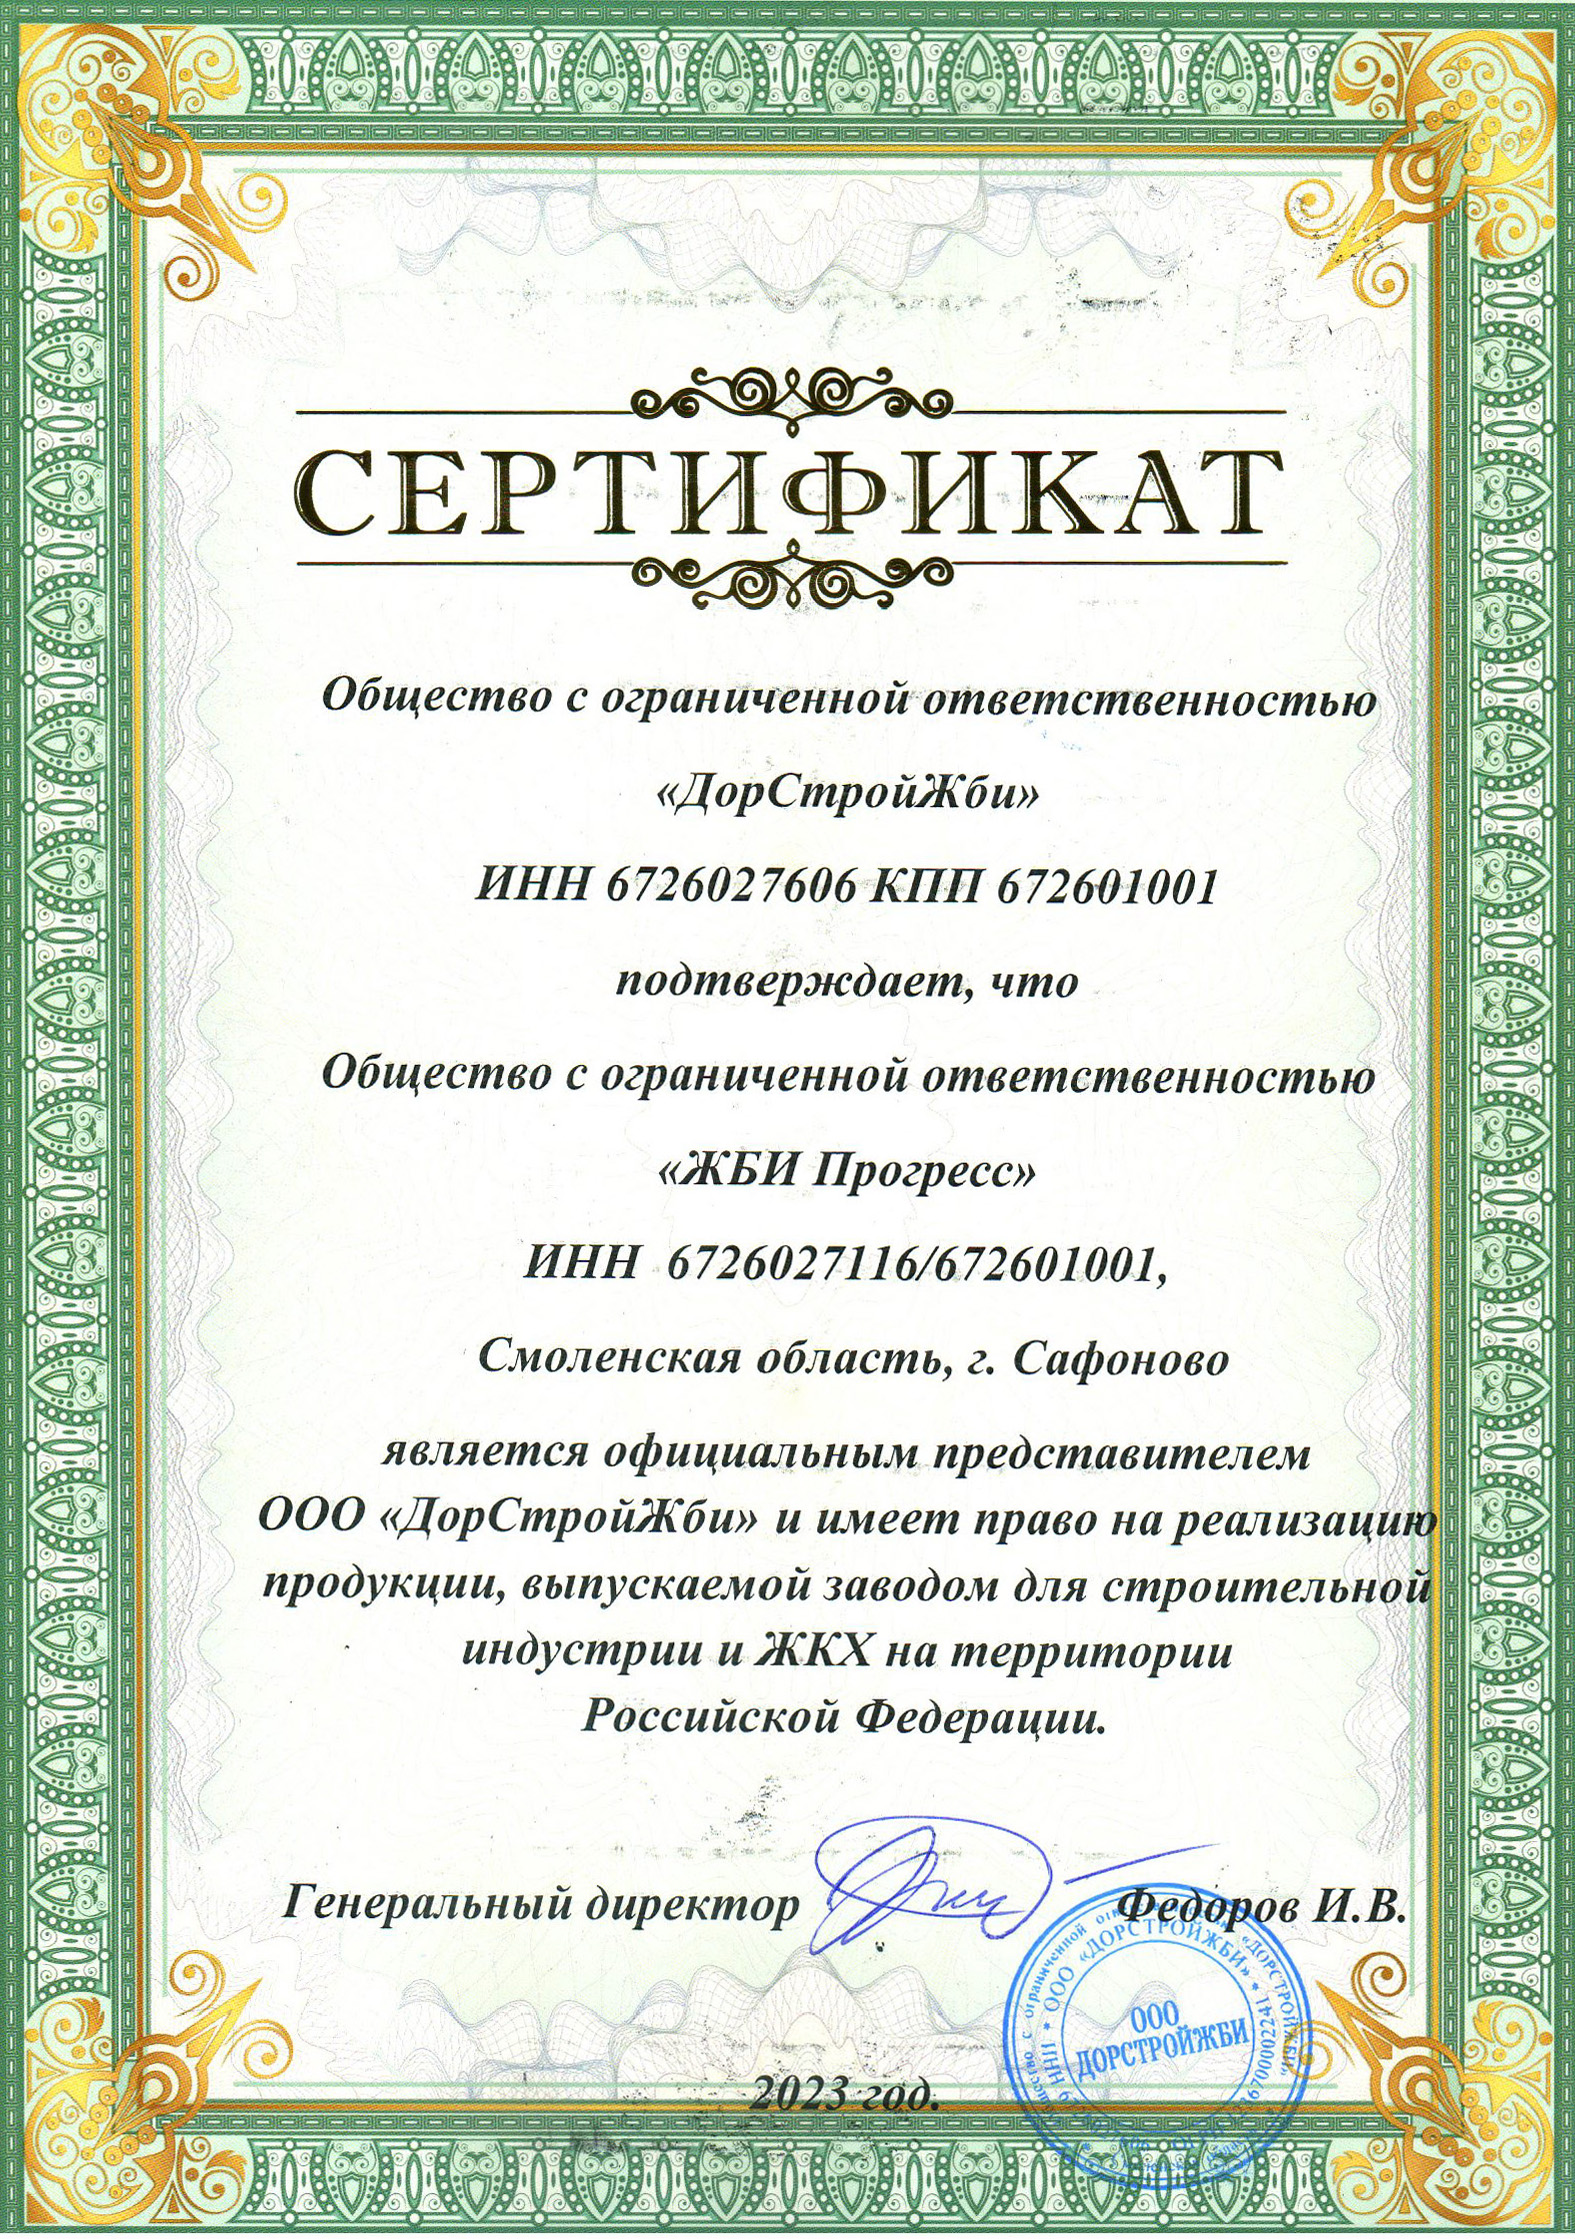 Сертификат ООО "ЖБИ Прогресс"